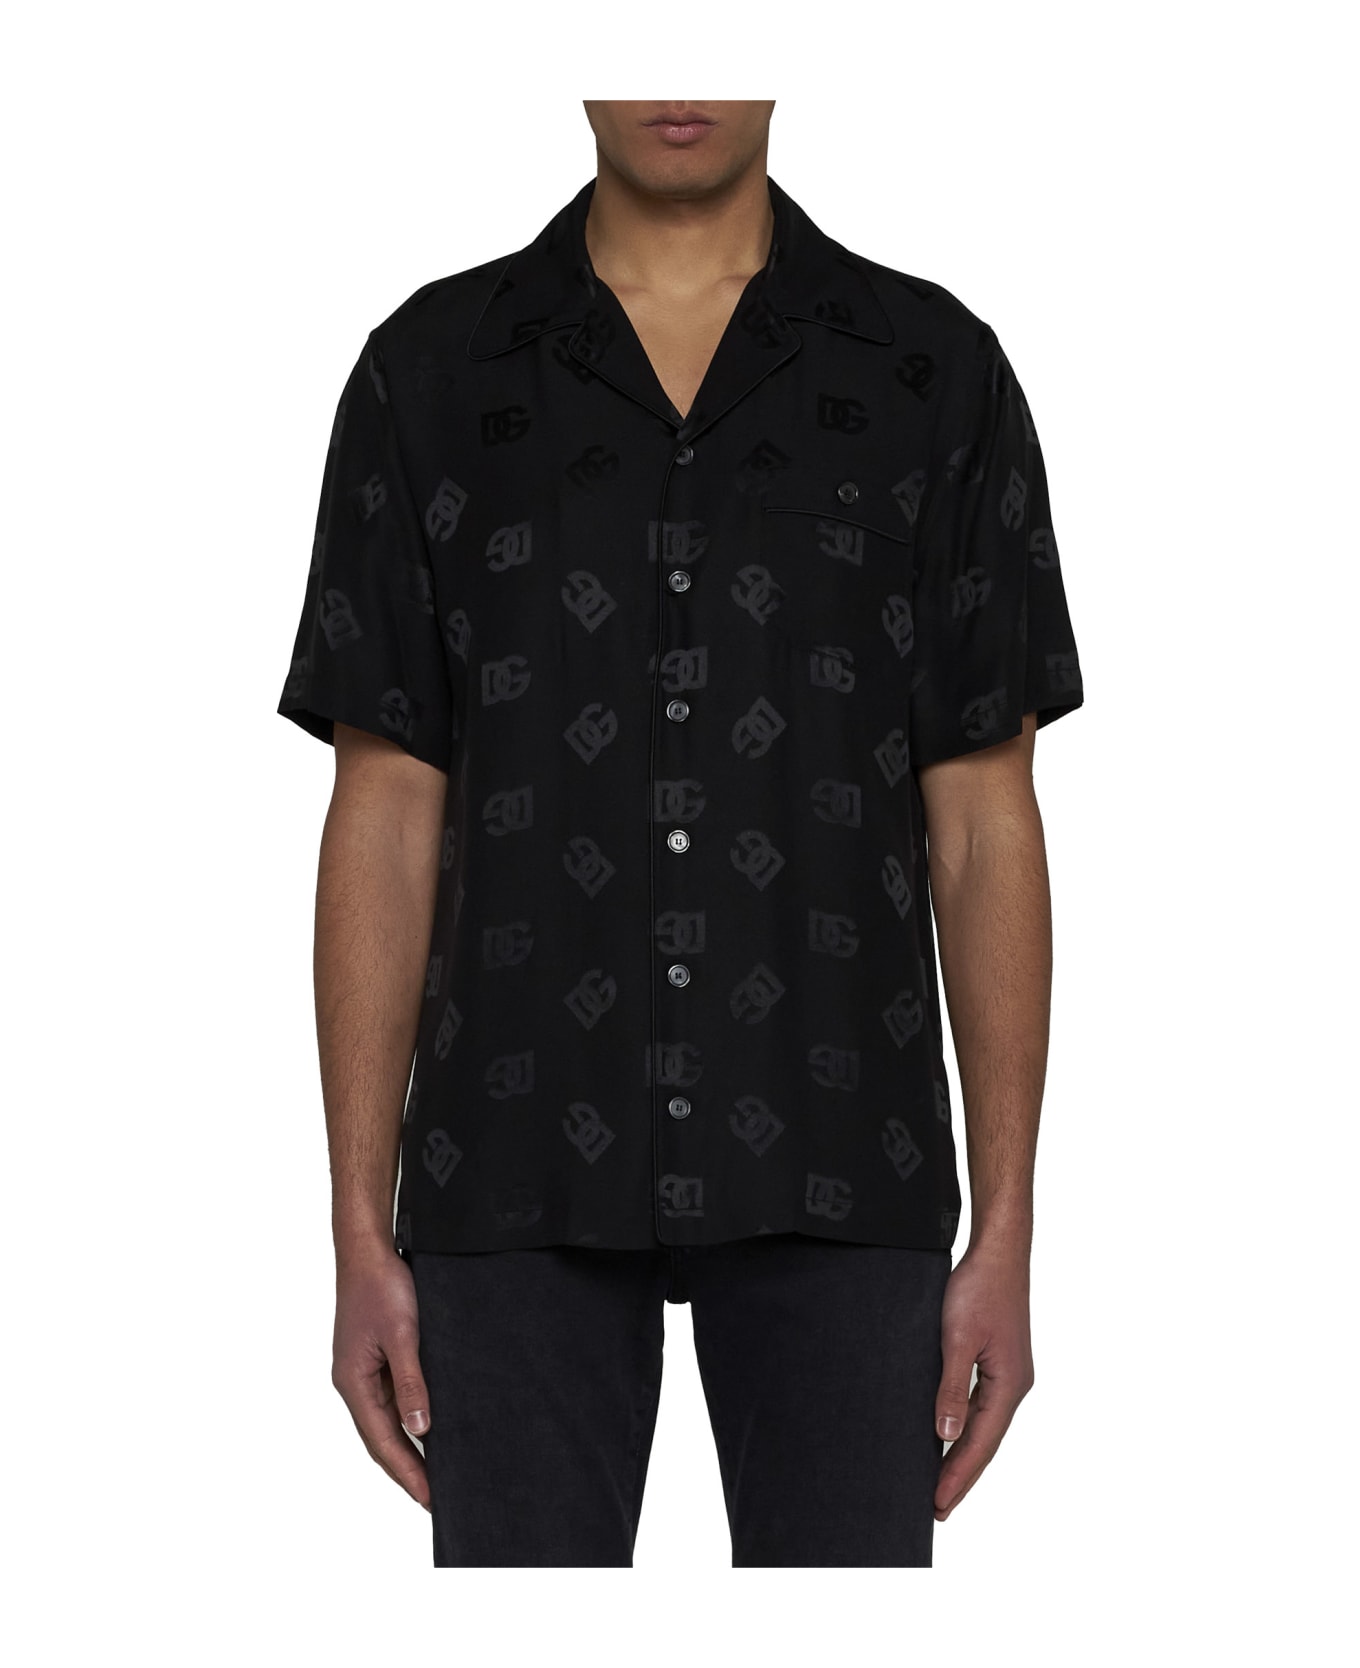 Dolce & Gabbana Silk Jacquard Shirt With Dg Monogram Print - Nero